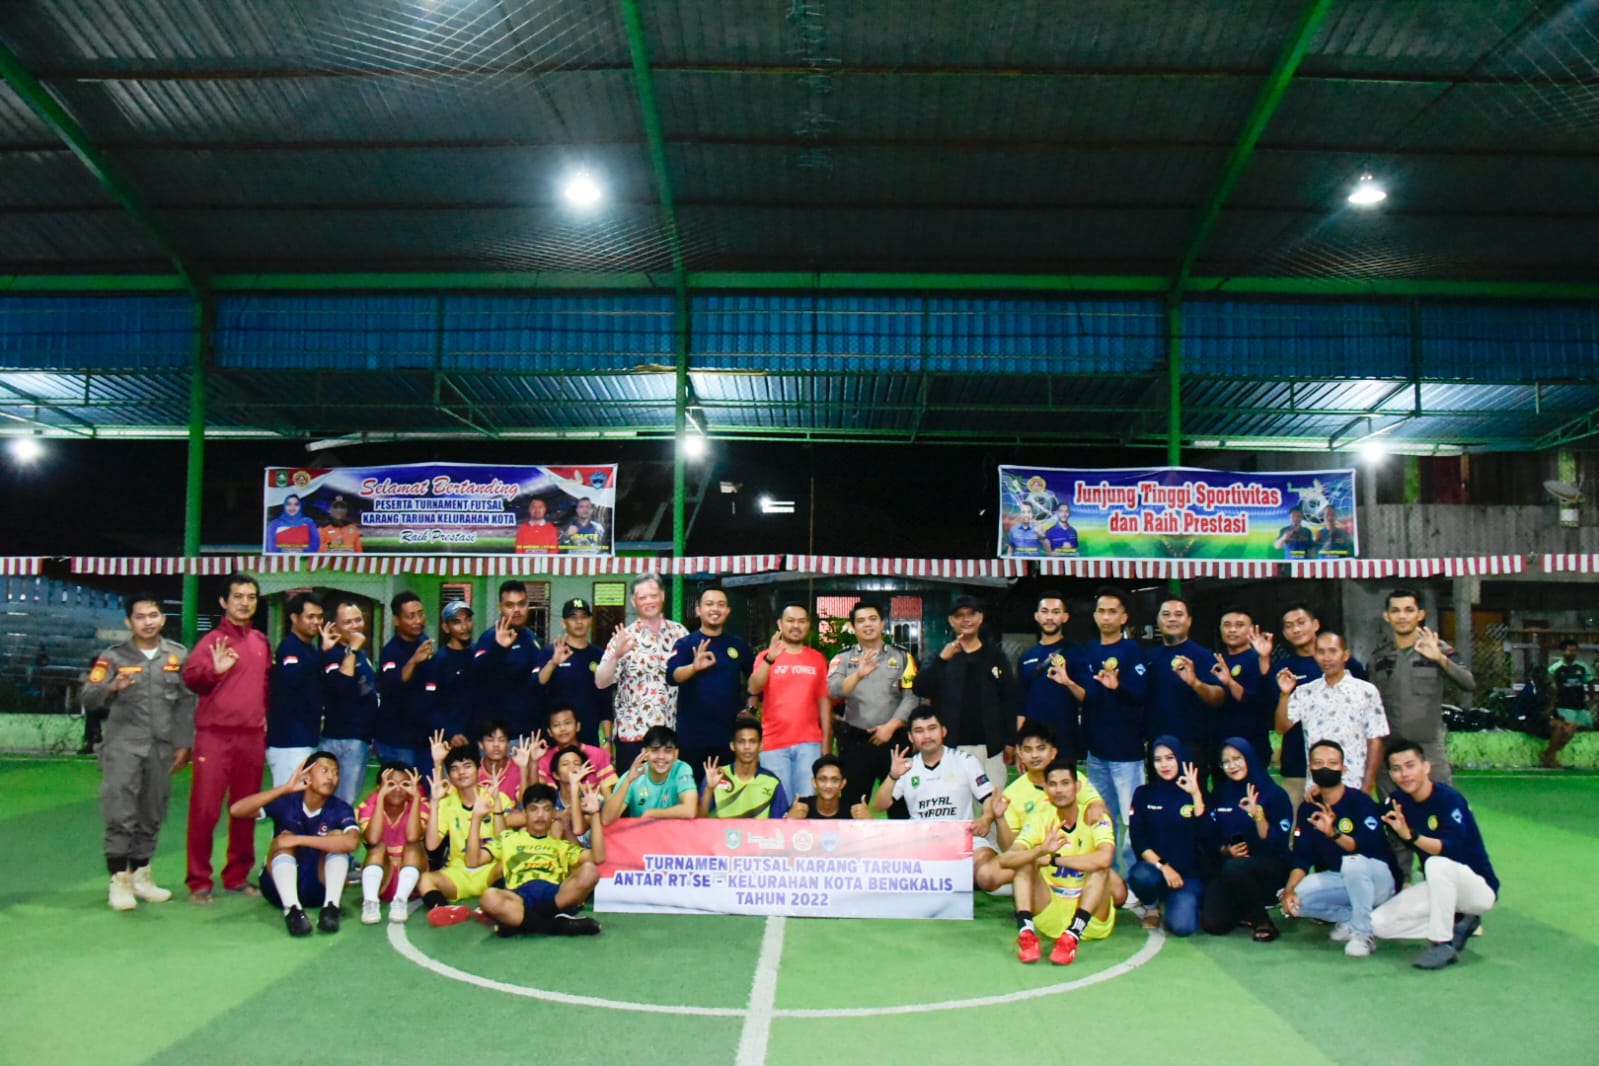 Lewat Program Bermasa, Kelurahan Kota Bengkalis Gelar Turnamen Futsal Antar RT